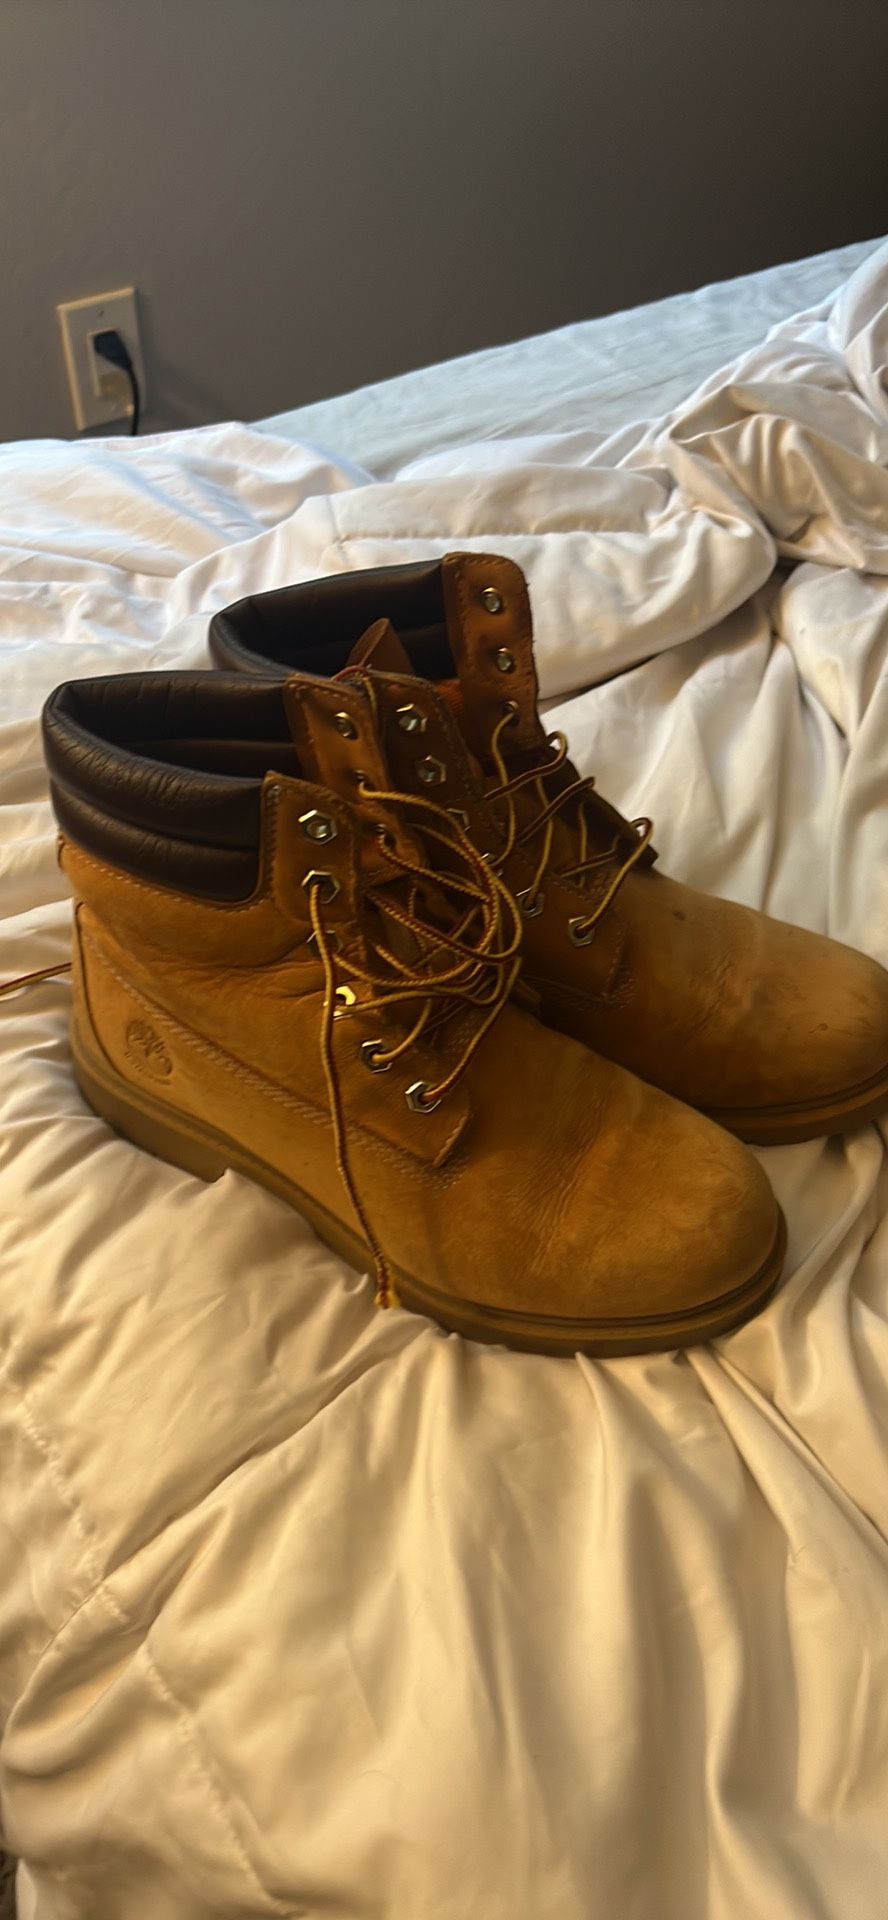 Women’s Timberland Boots